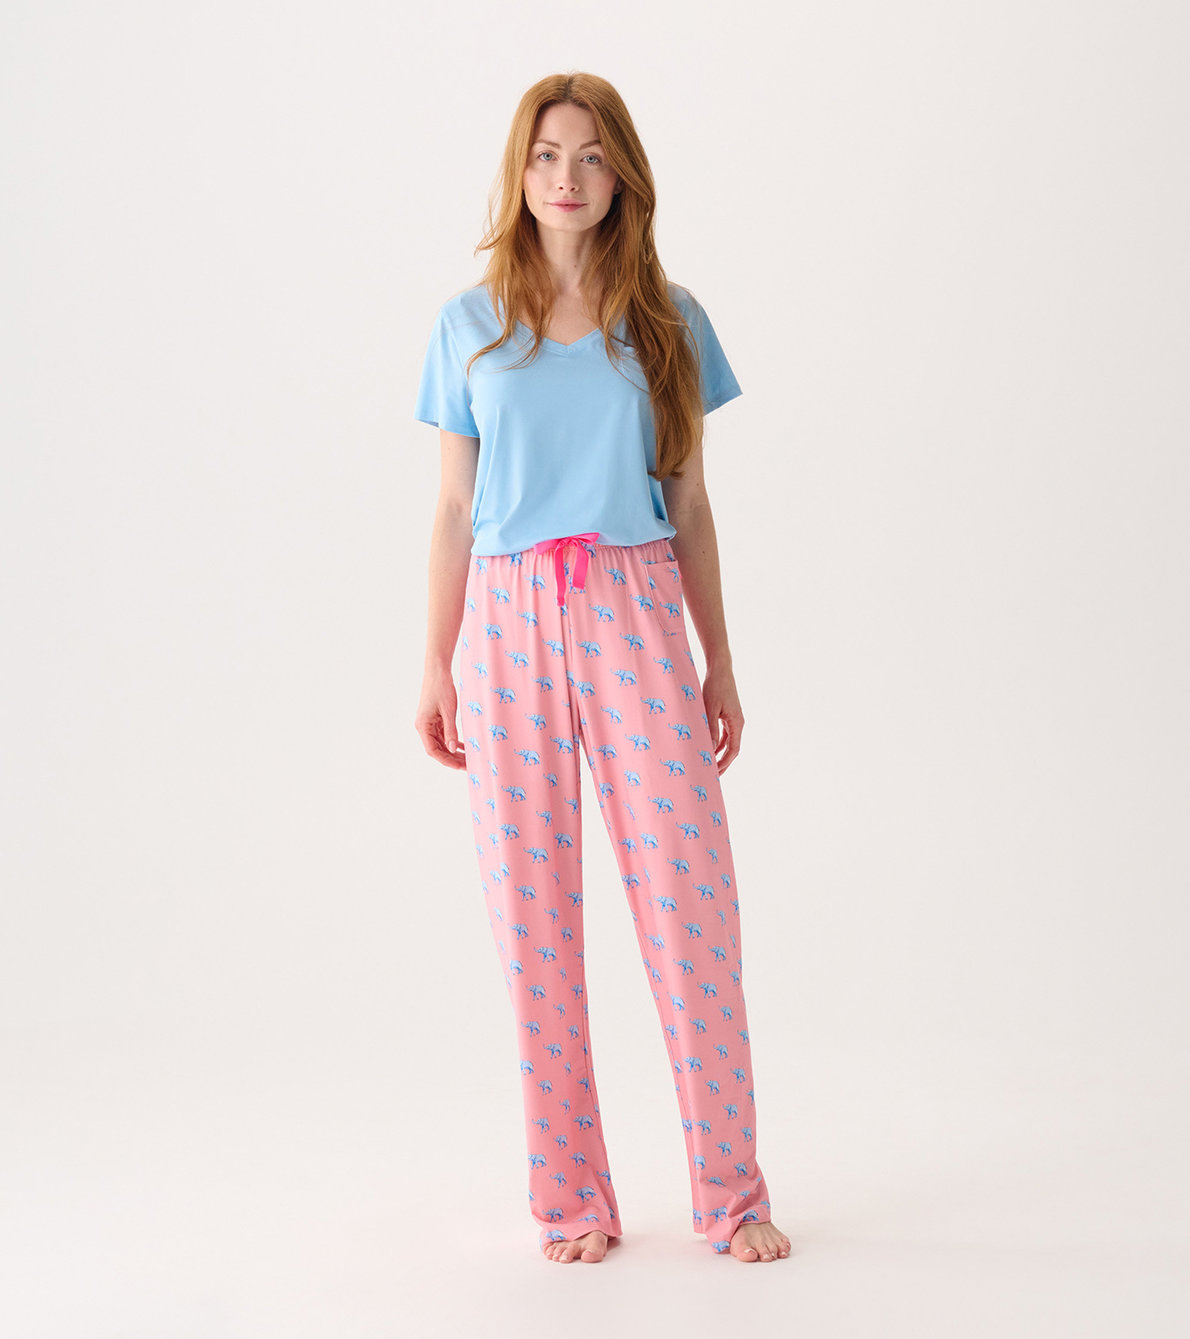 View larger image of Capelton Road Women's Elephantastic Pajama Pants